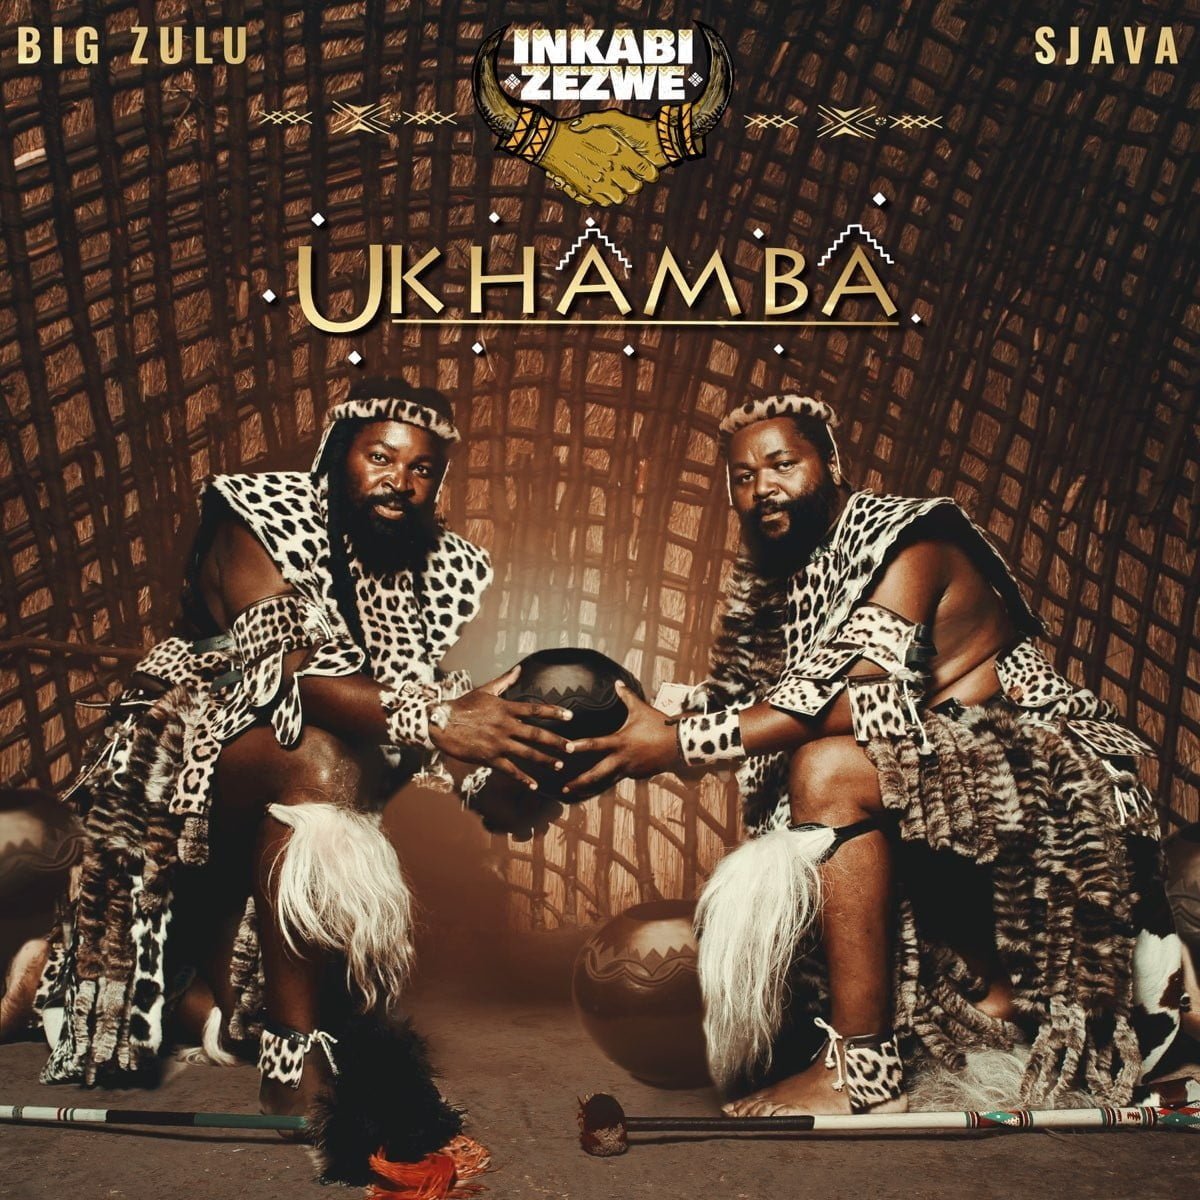 Inkabi Zezwe, Sjava & Big Zulu - Khaya Lami mp3 download free lyrics